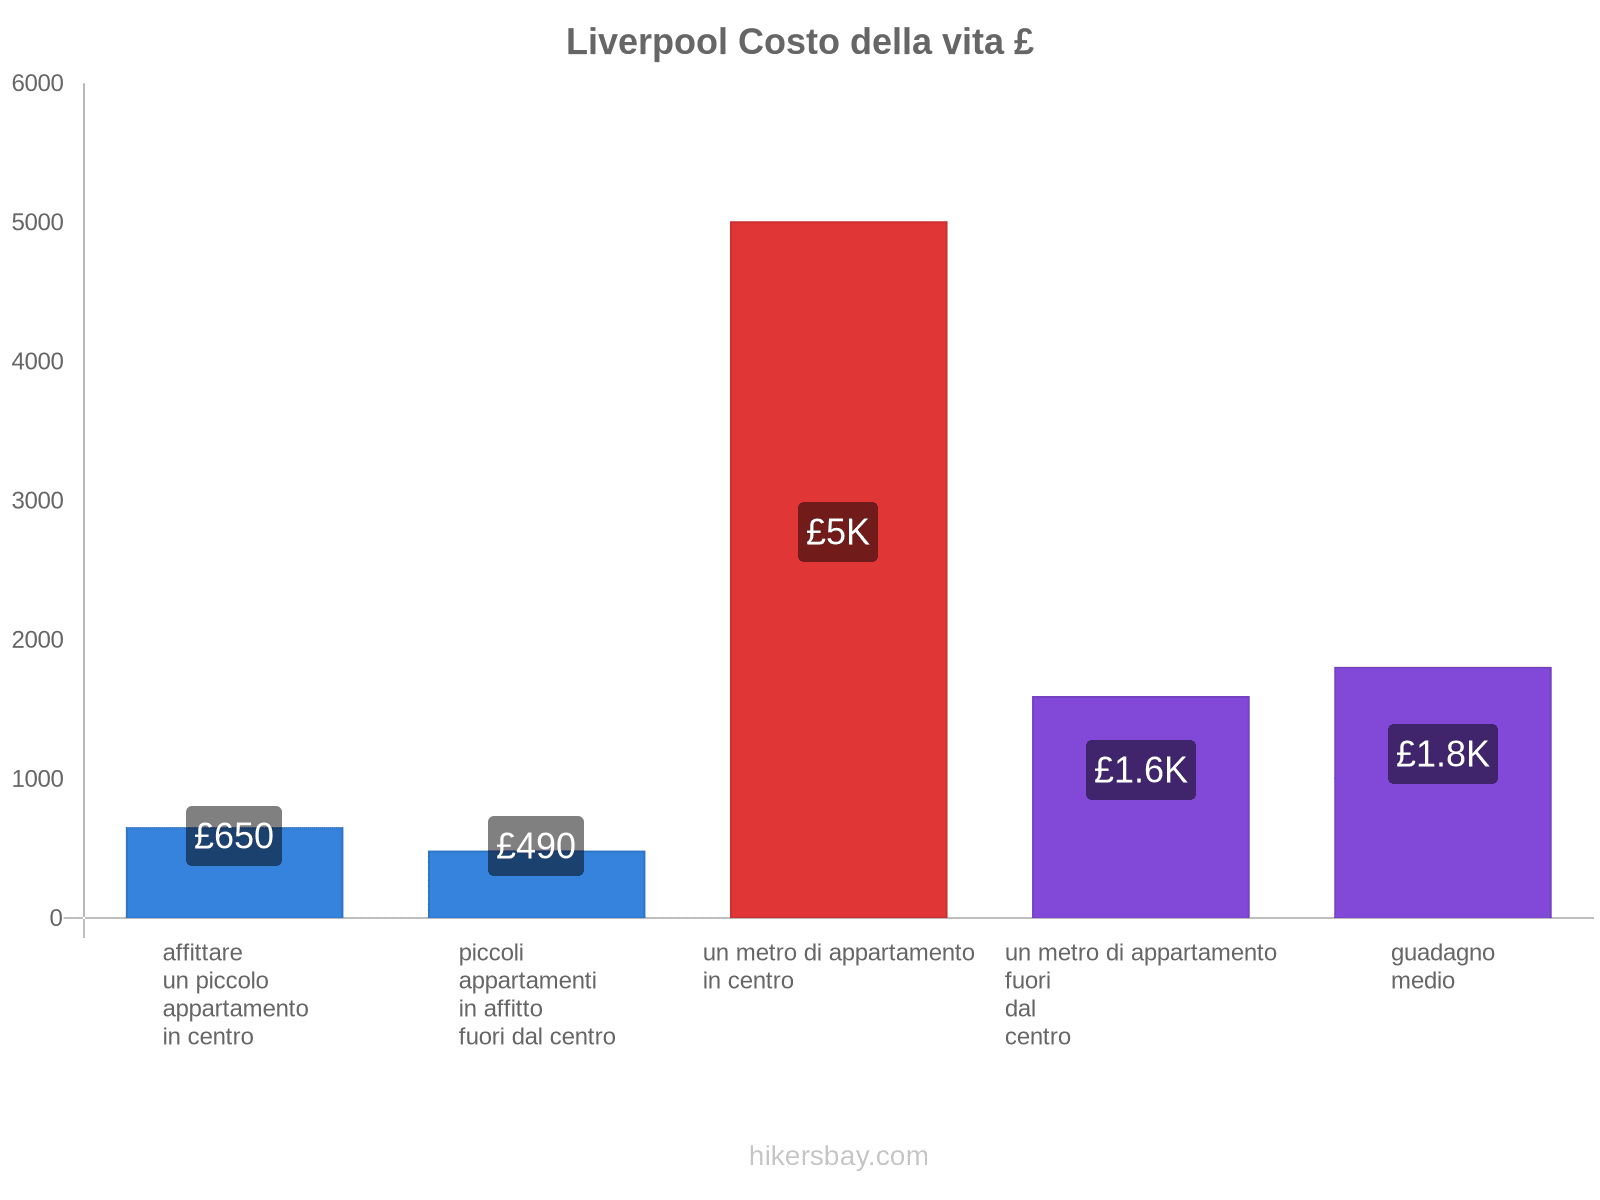 Liverpool costo della vita hikersbay.com